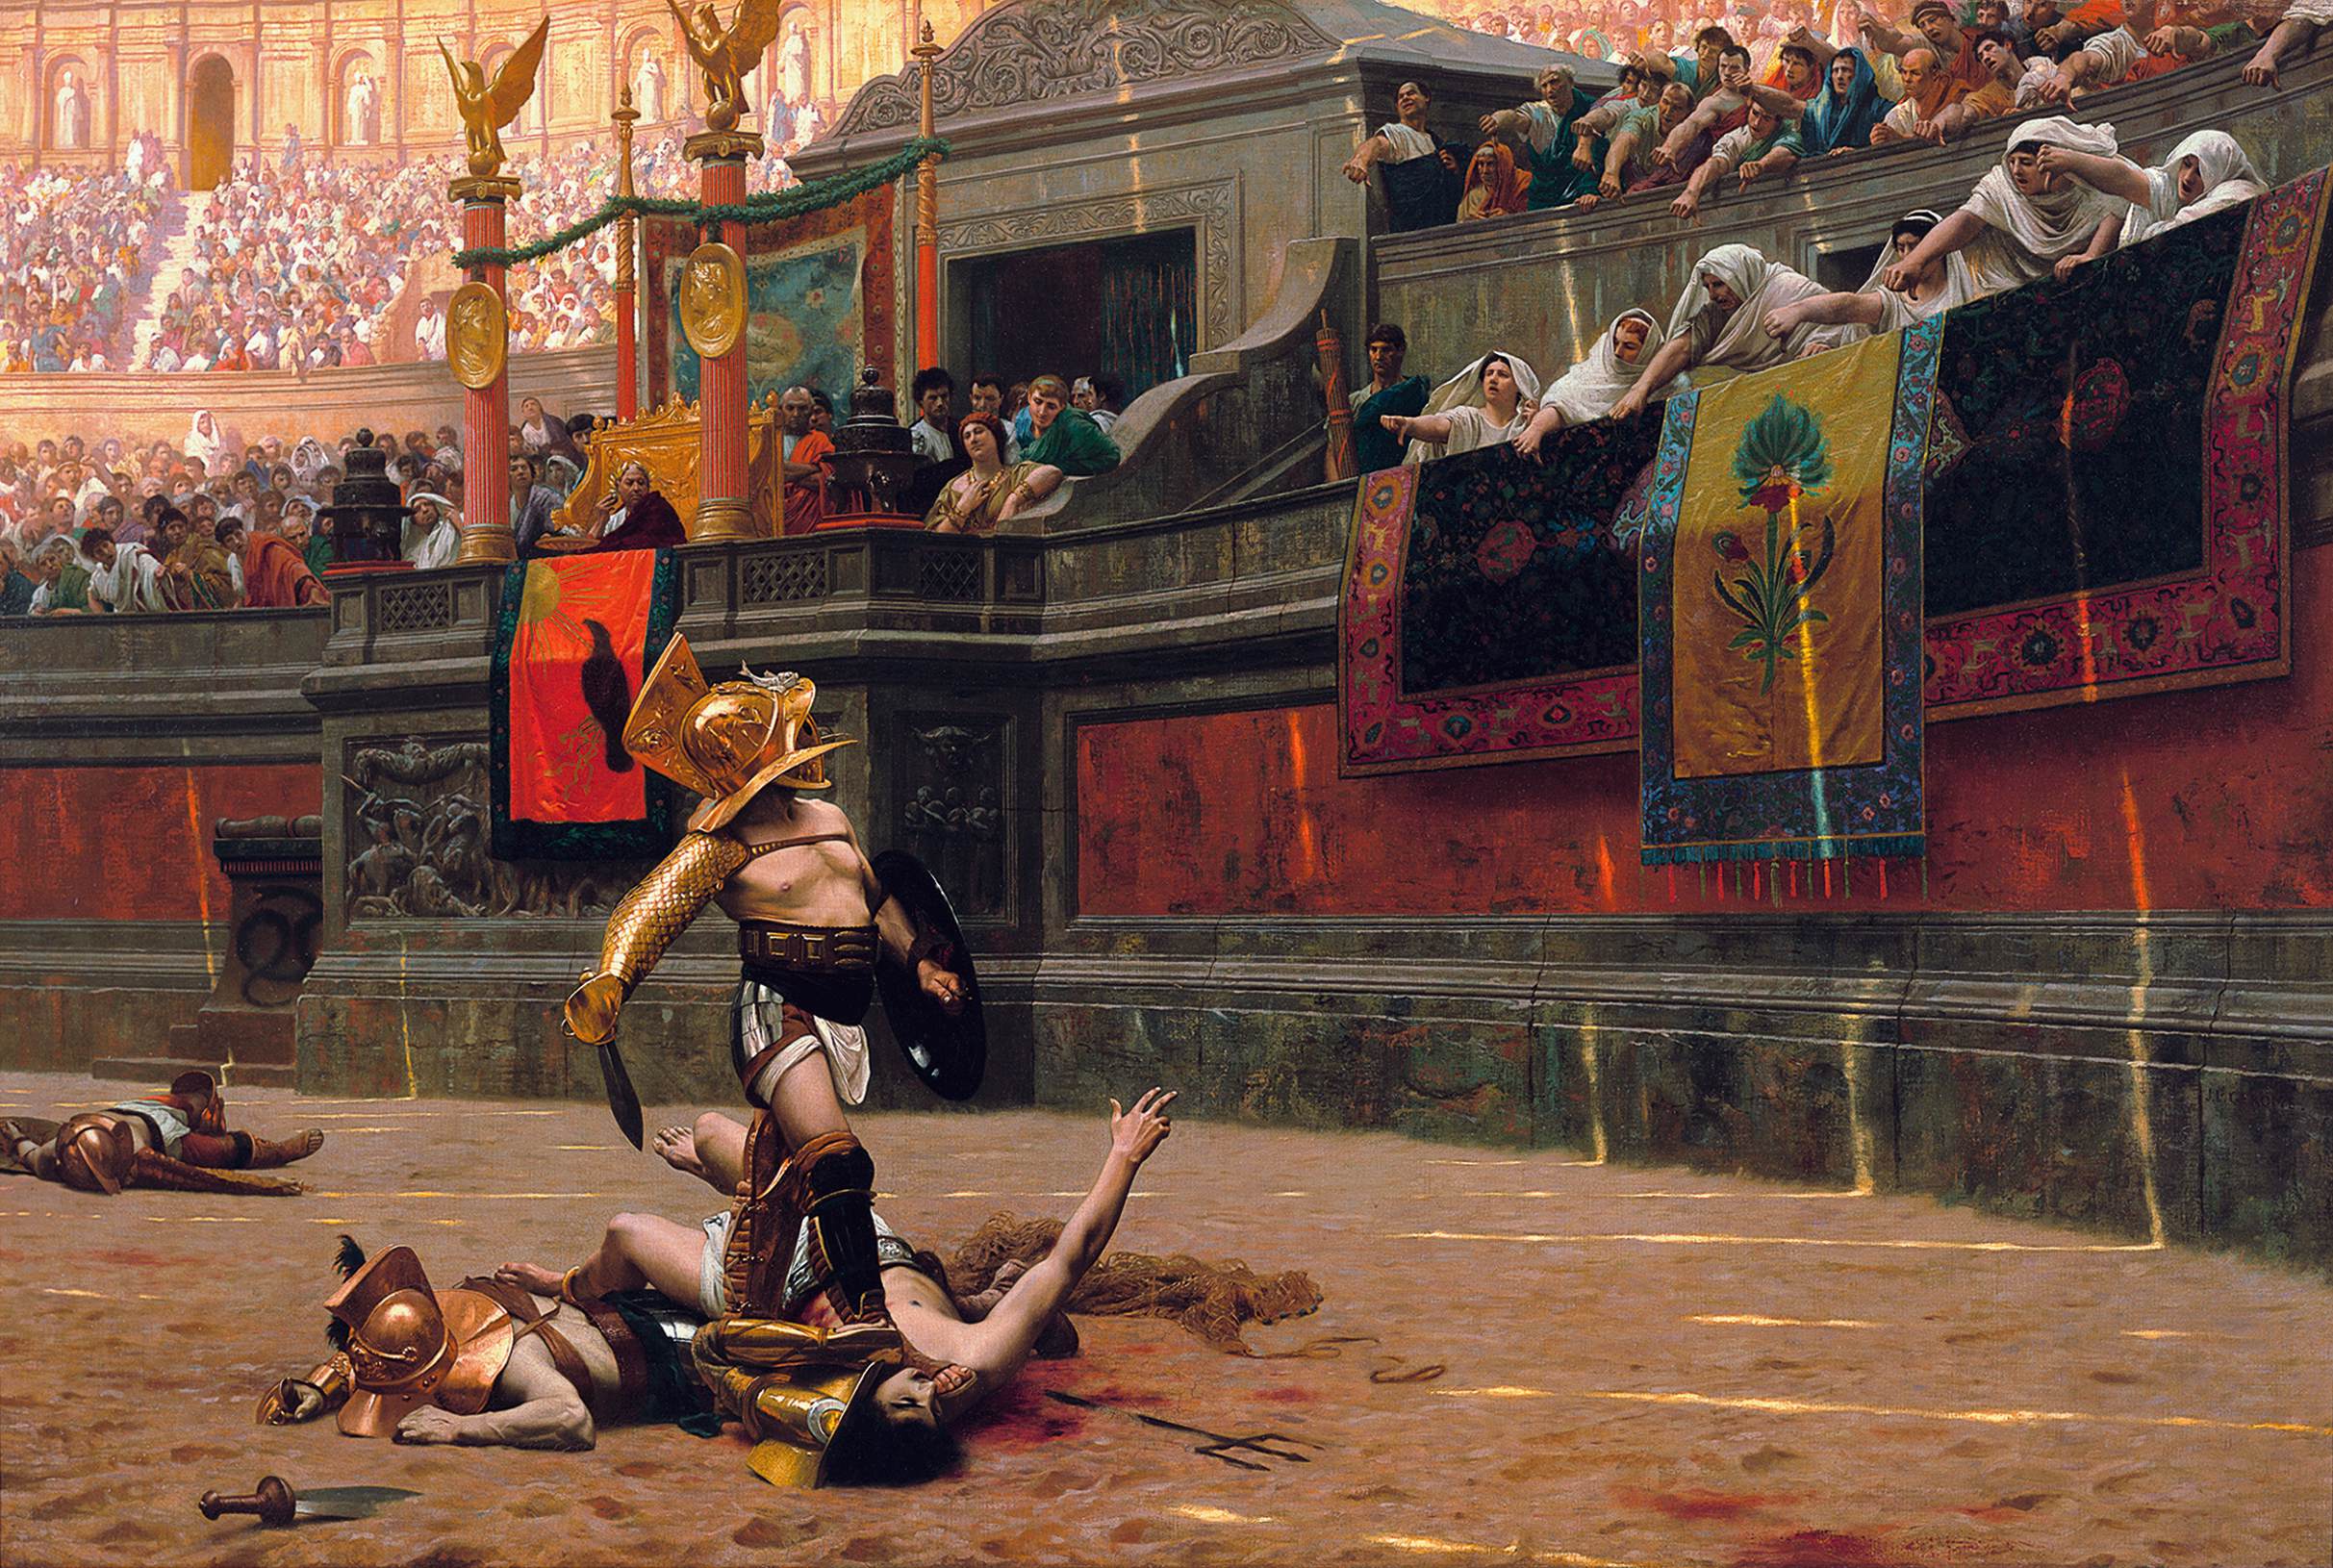 Gladiators of Rome image